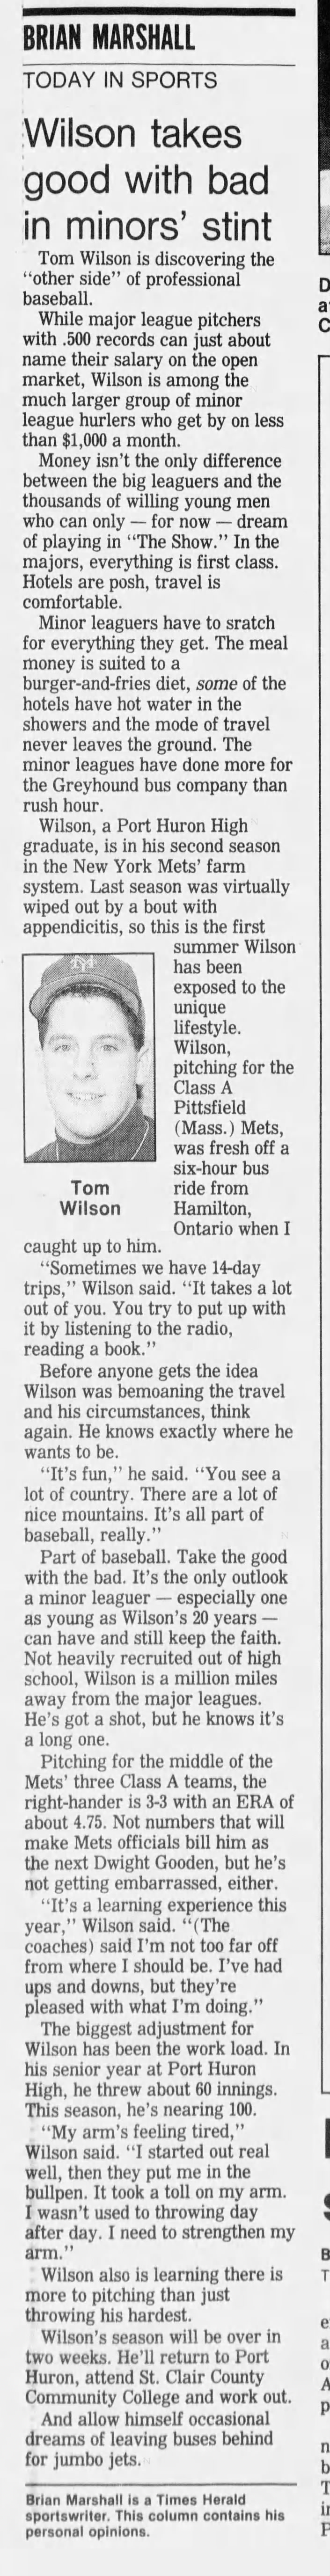 Tom Wilson - Aug. 23, 1990